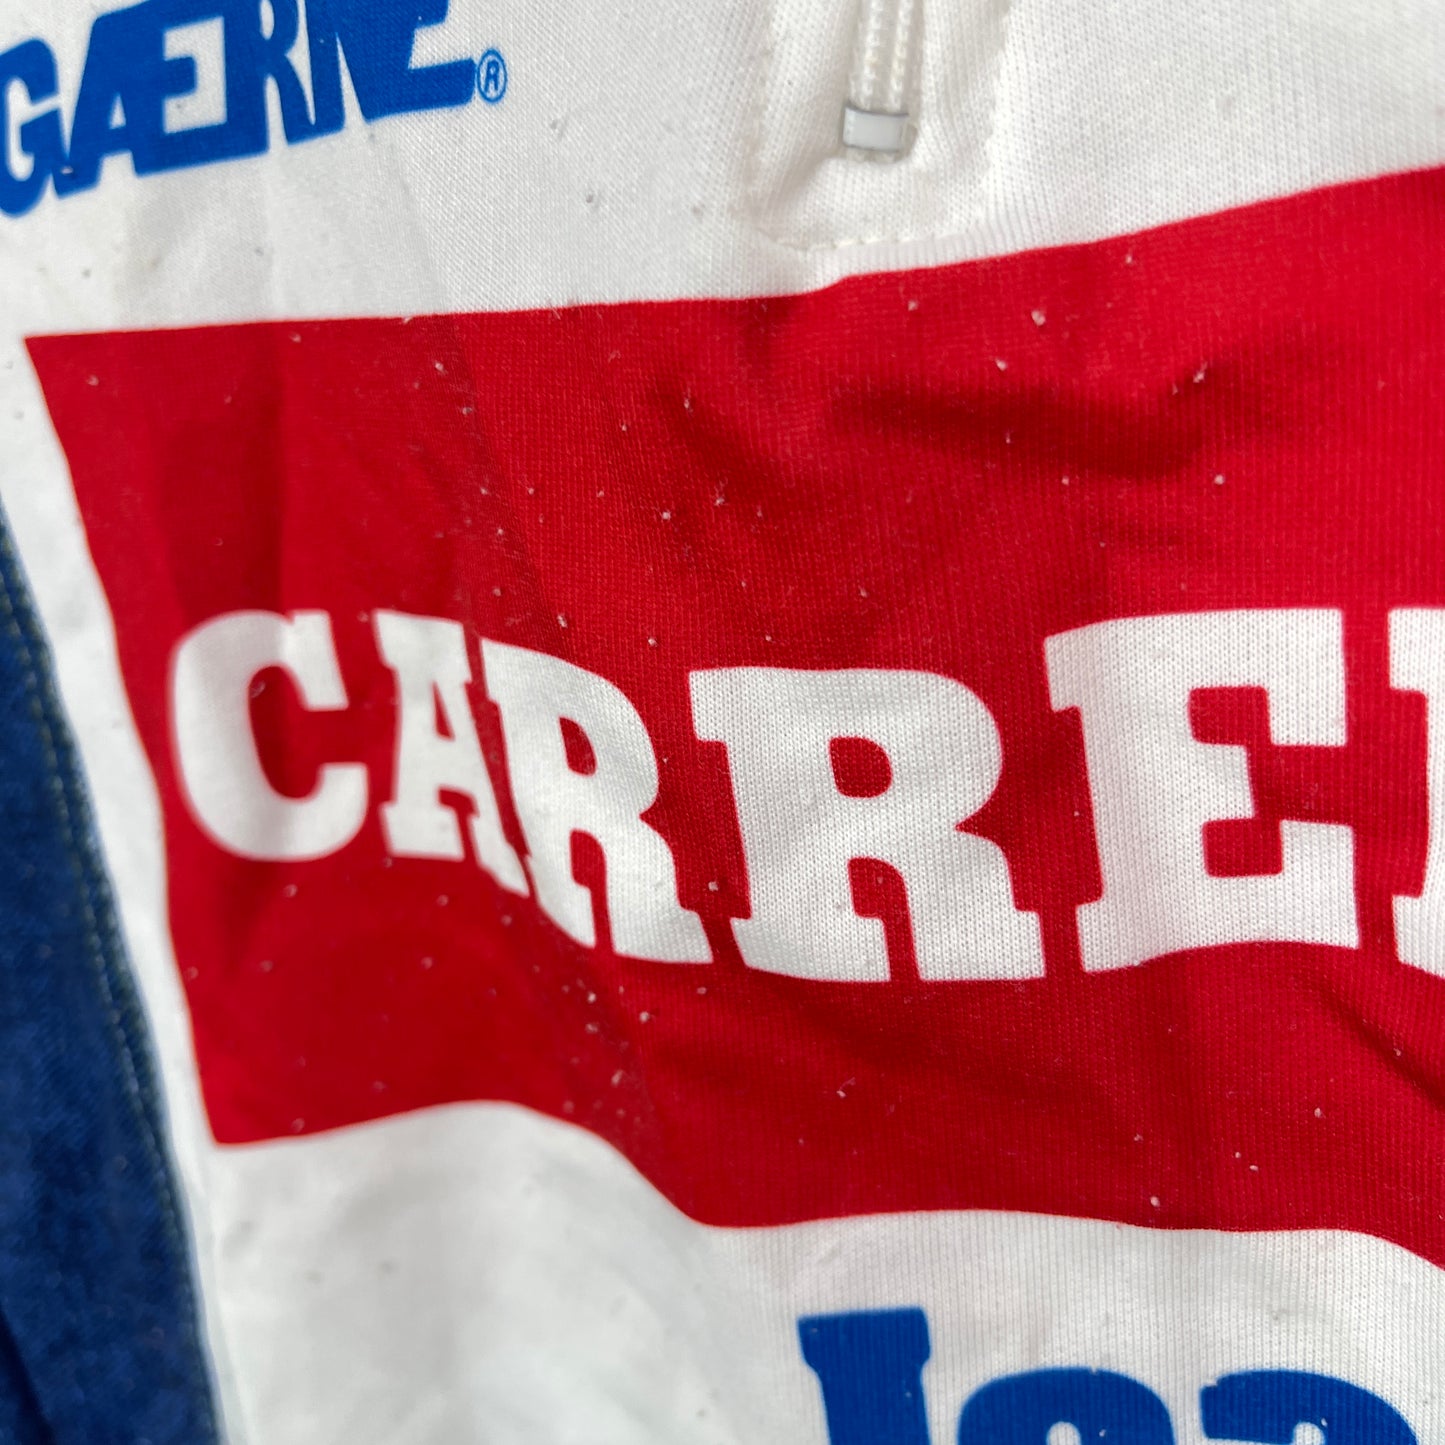 Carrera Vintage Size 5 XL Men's Short Sleeve Carrera Cycling Jersey